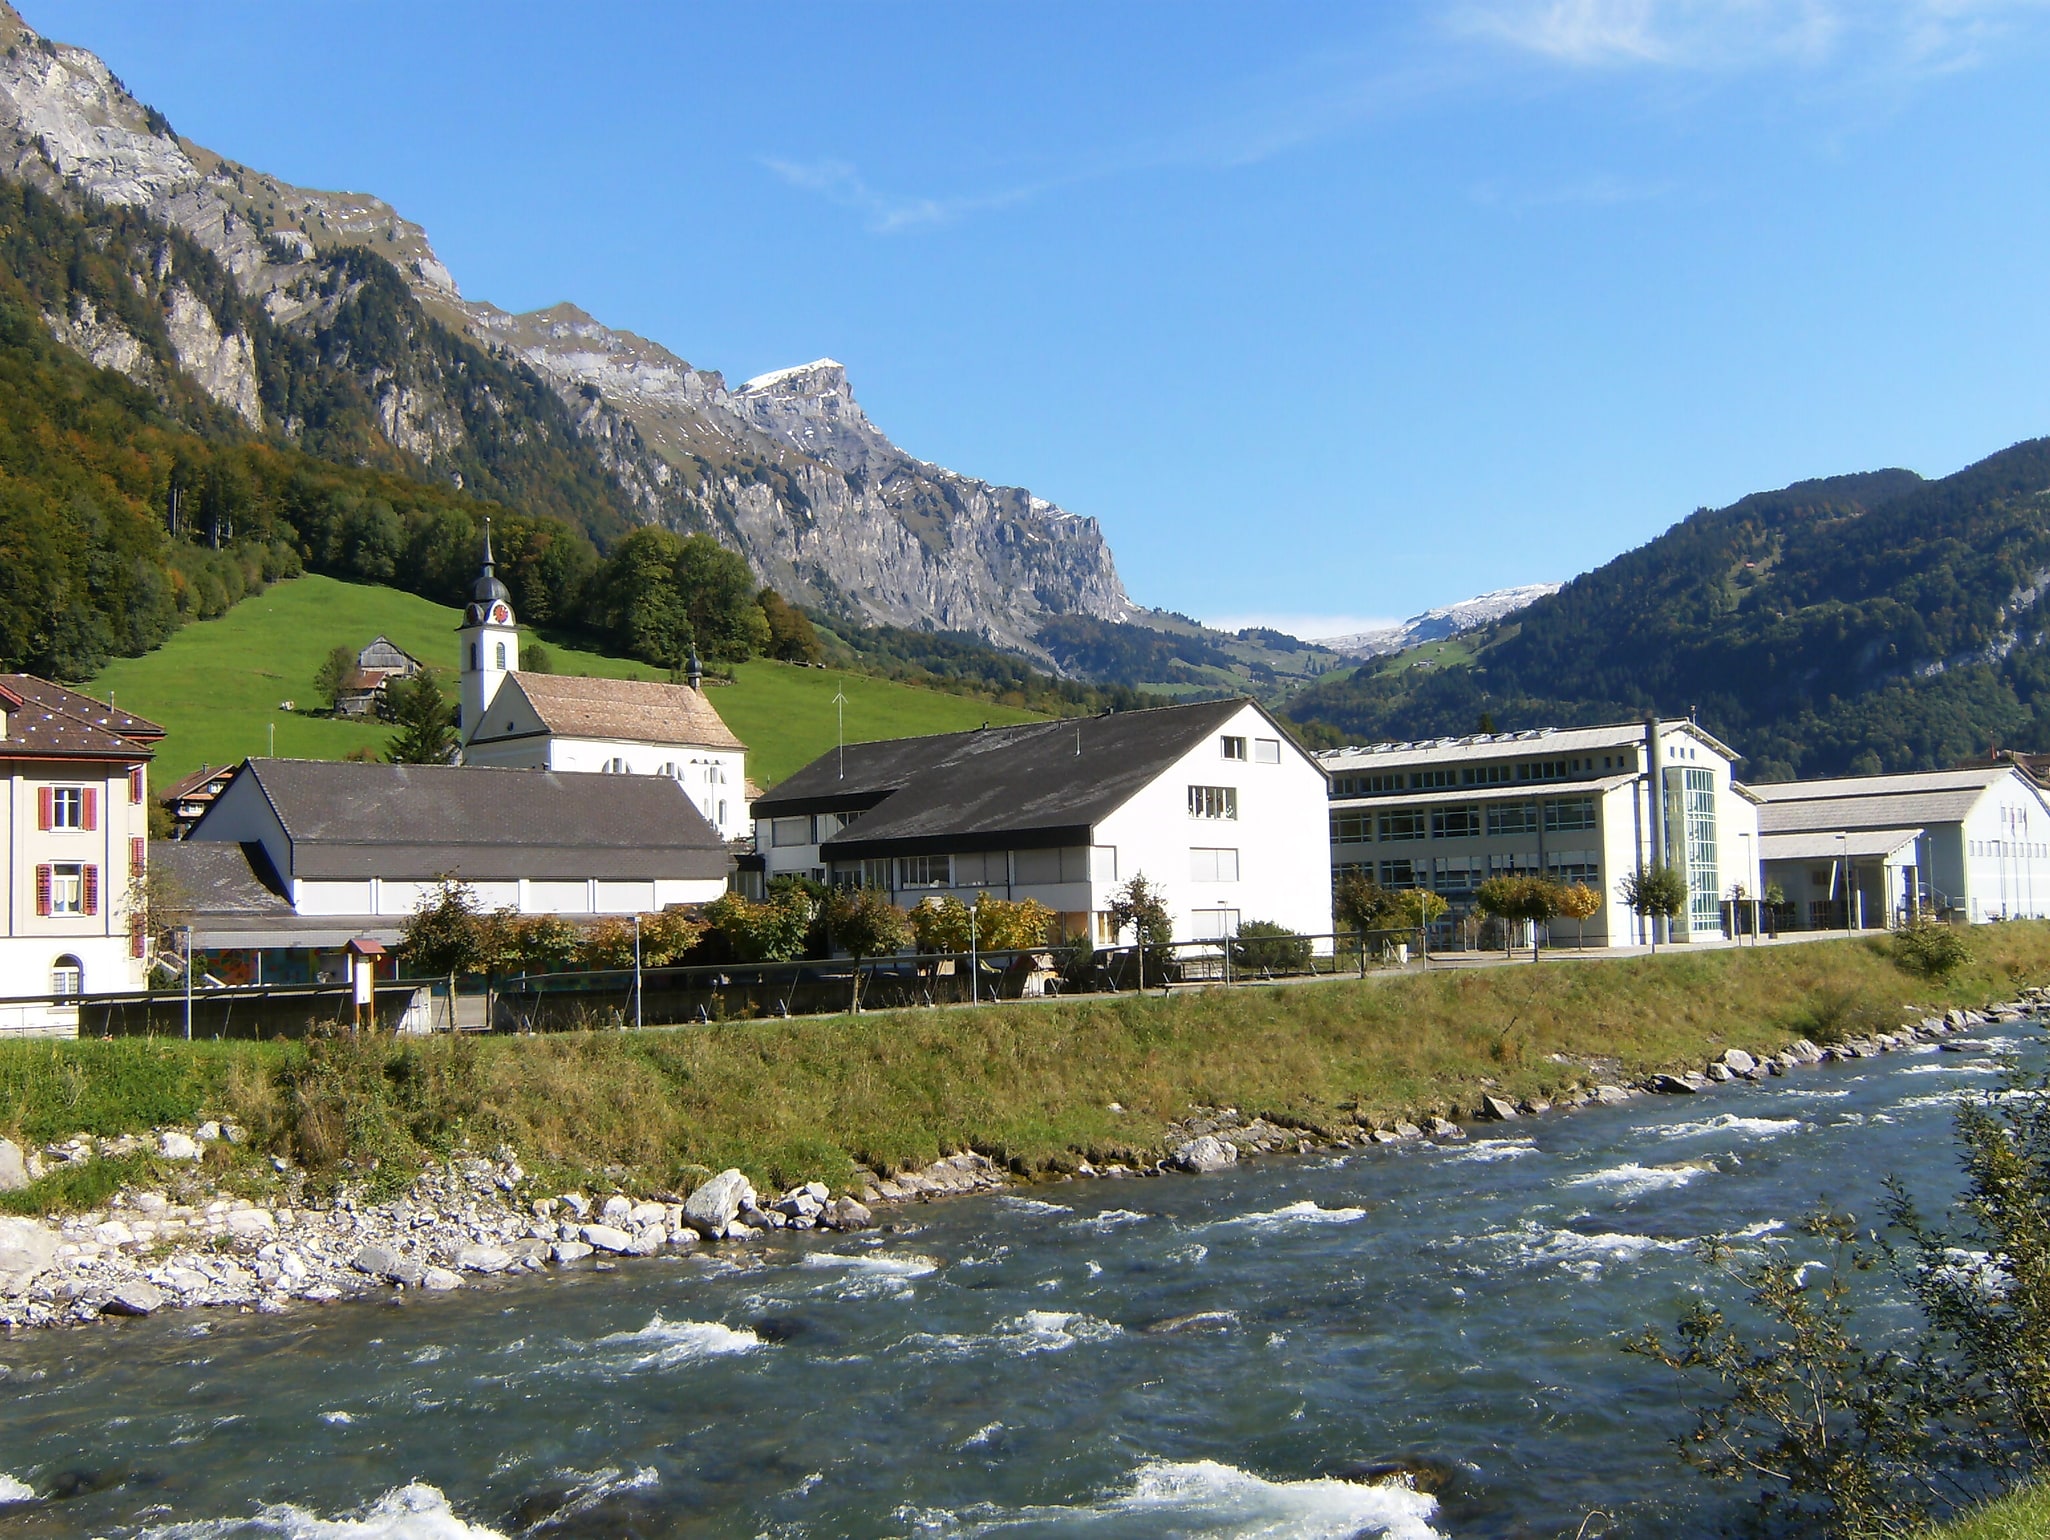 Muotathal, Switzerland